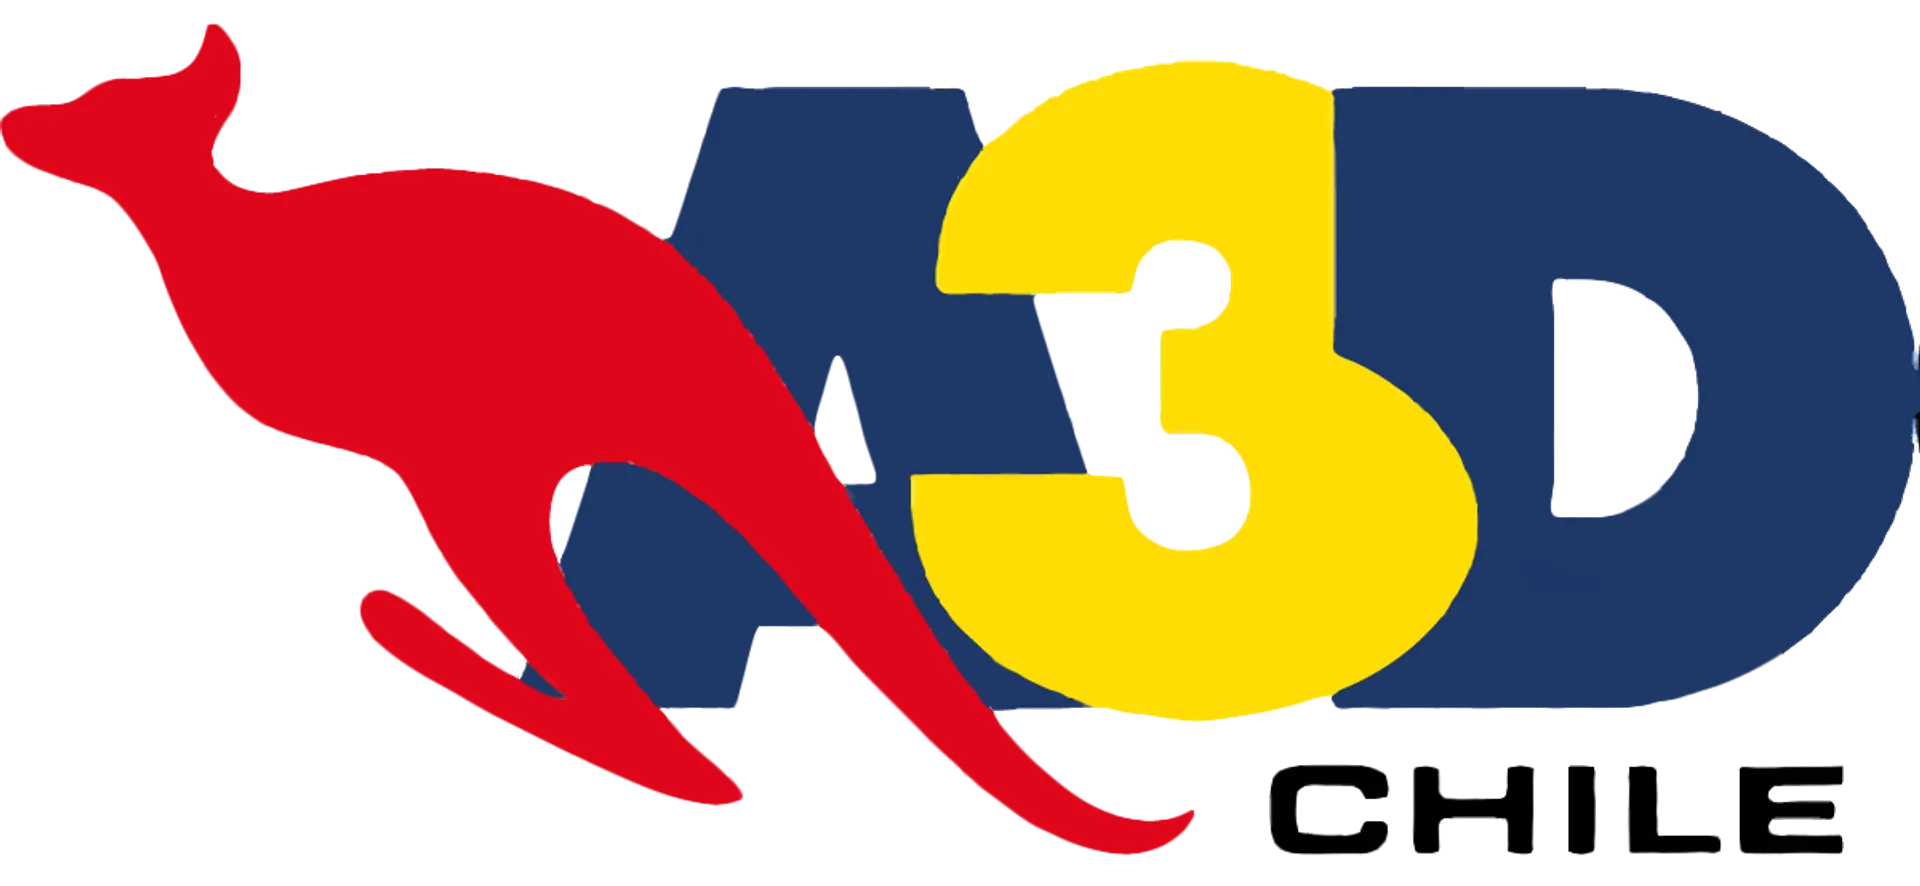 A3D logo